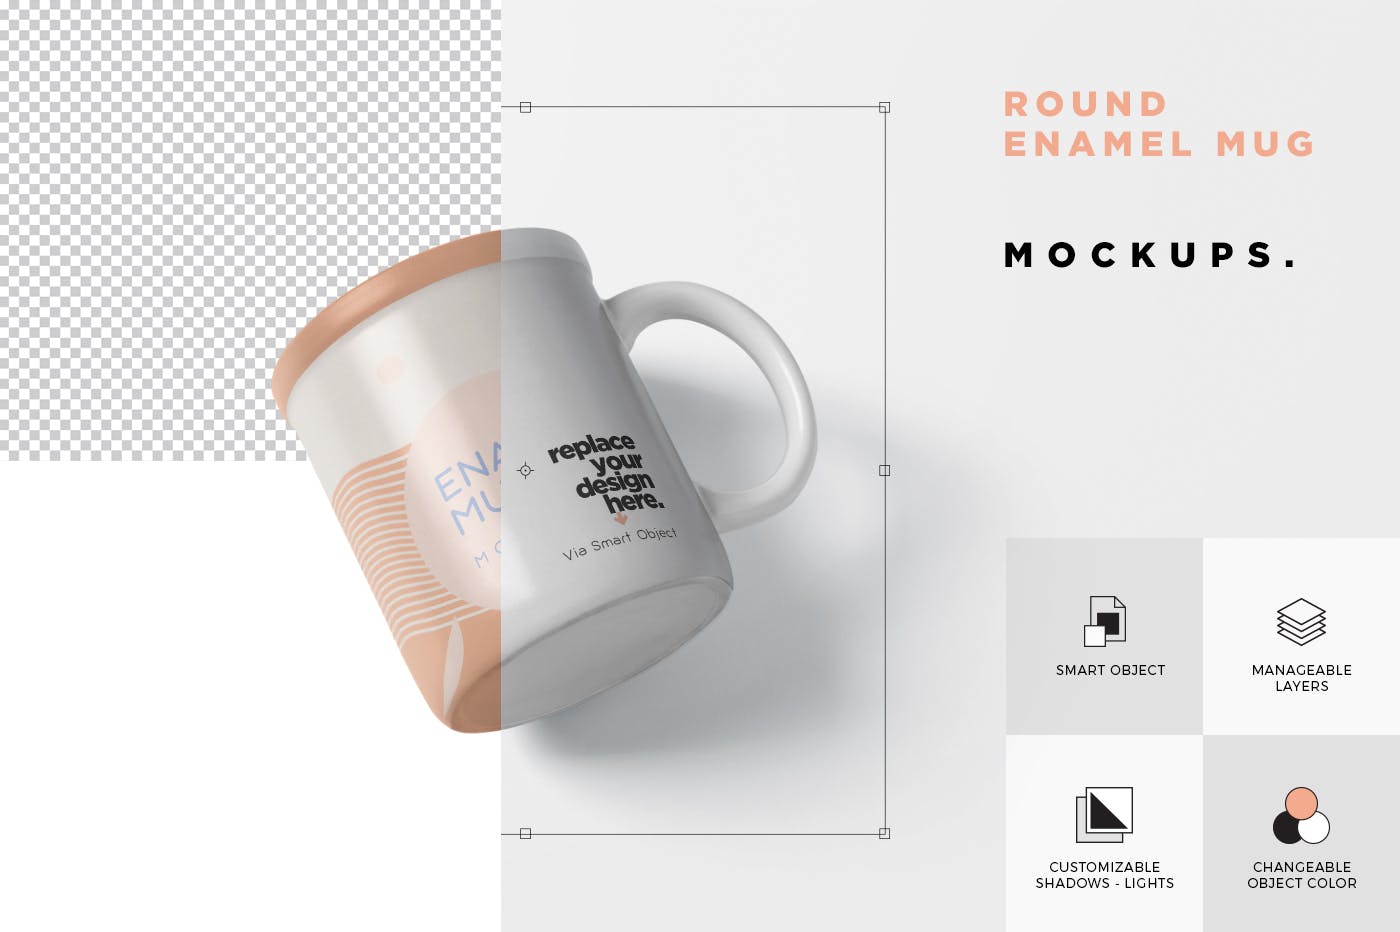 带把手圆形搪瓷杯马克杯图案设计16图库精选 Round Enamel Mug Mockup With Handle插图(5)